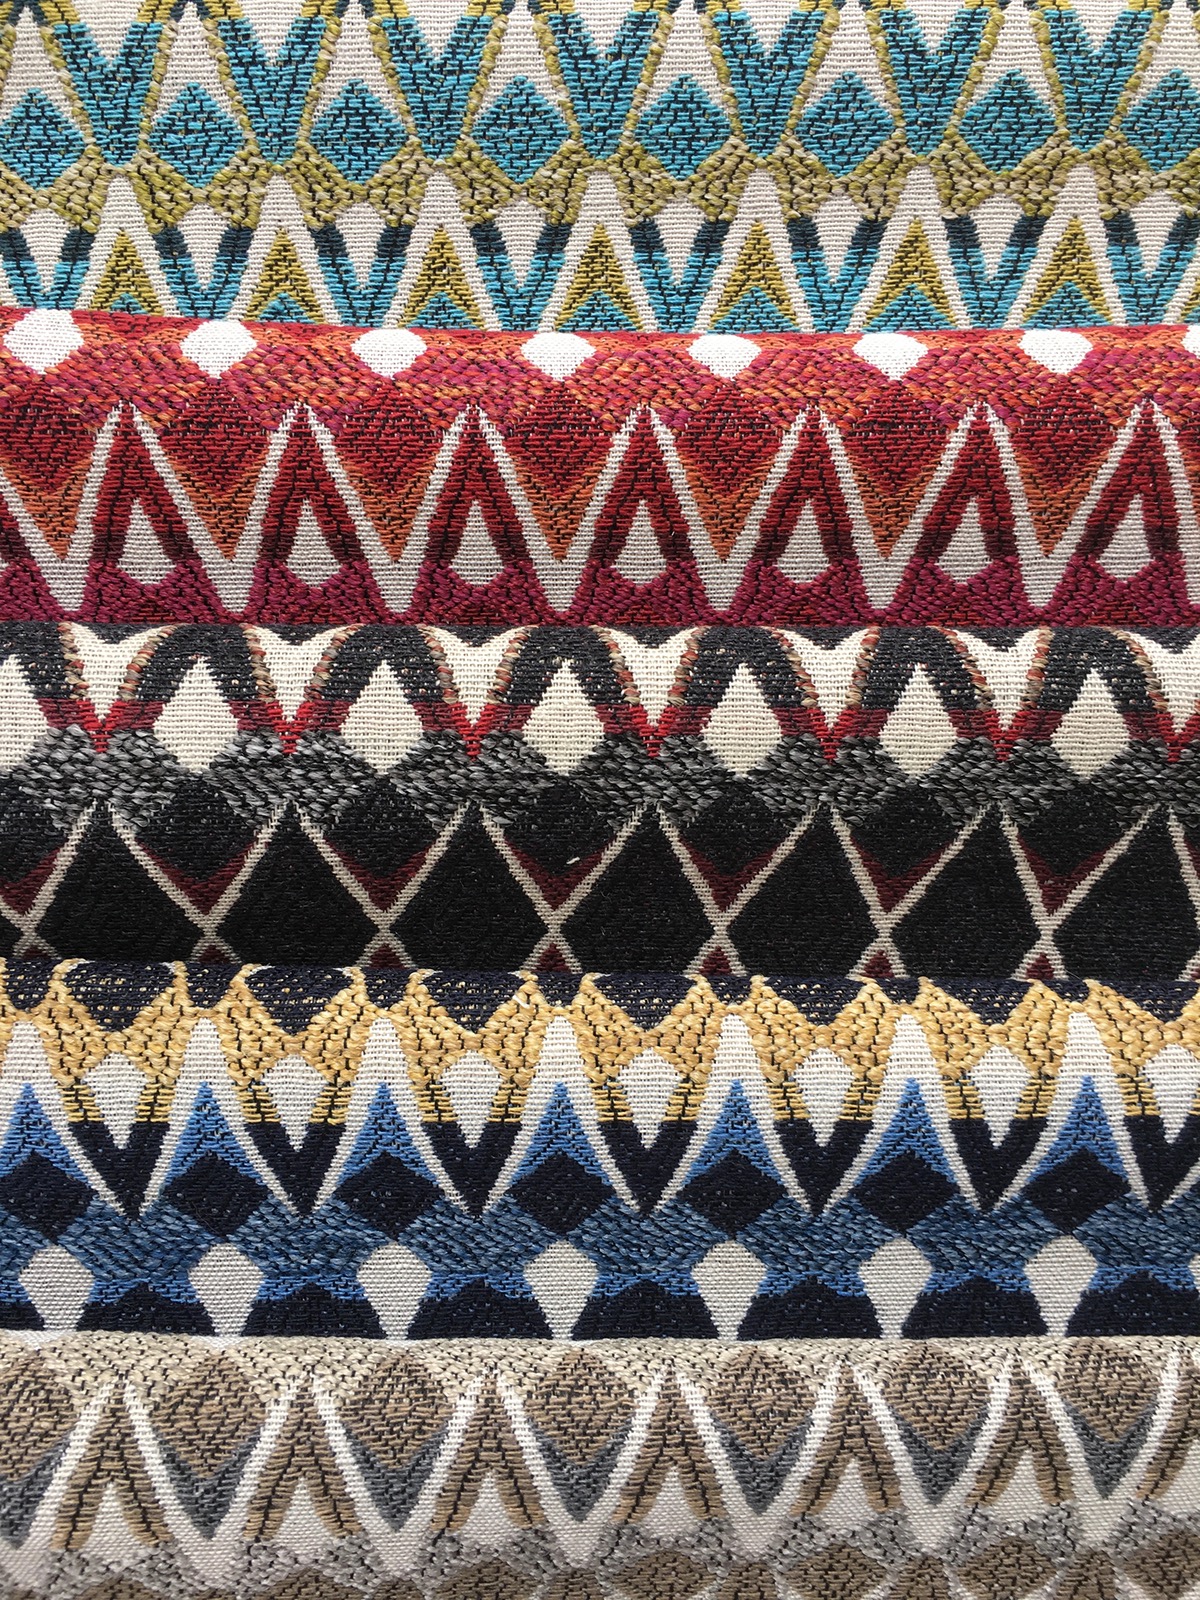 jacquard Woven weaving textile design Interior residential contemporary plaid geometric